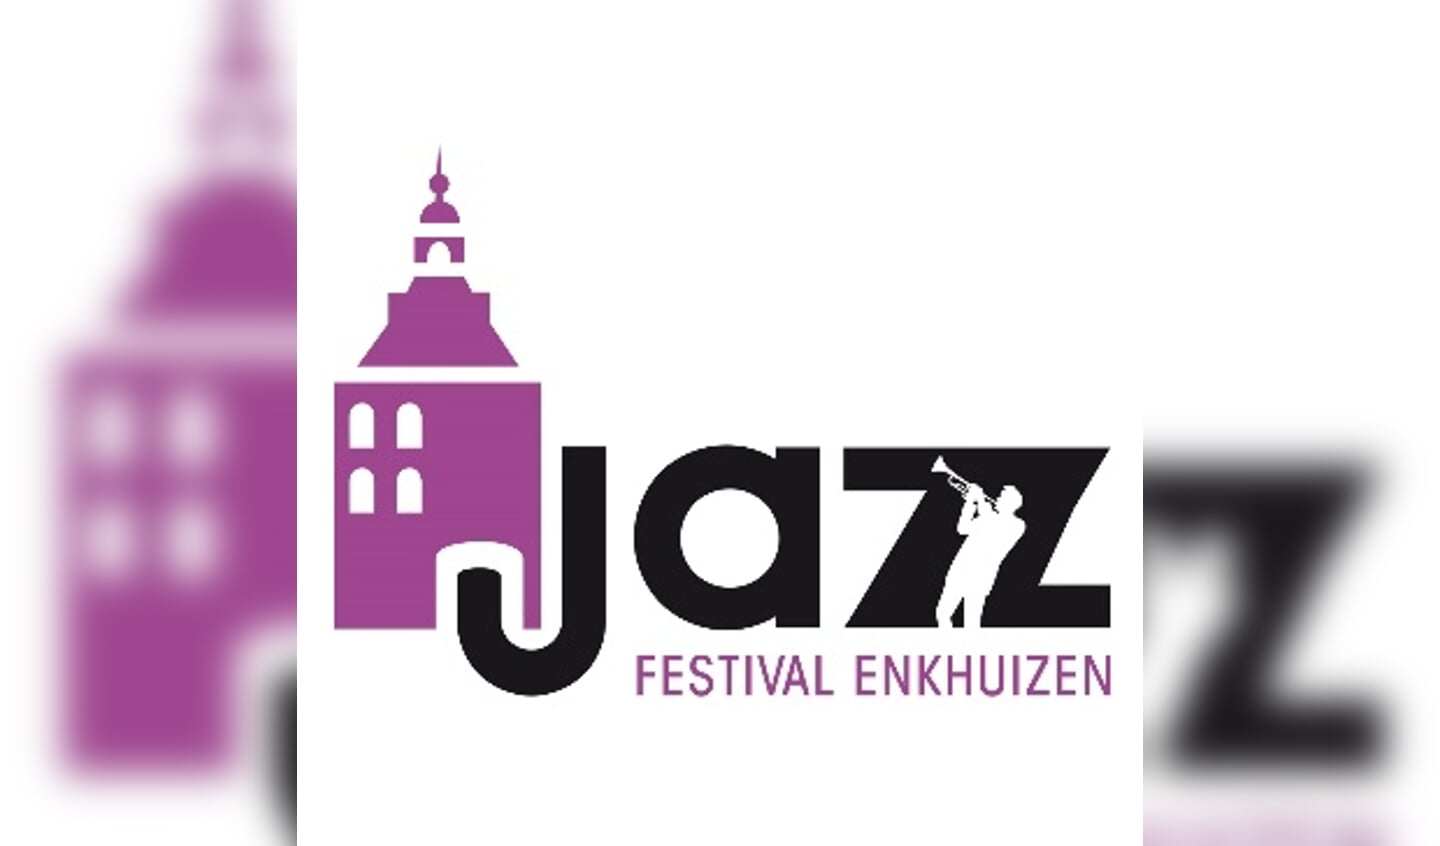 Jazz Festival Enkhuizen logo.